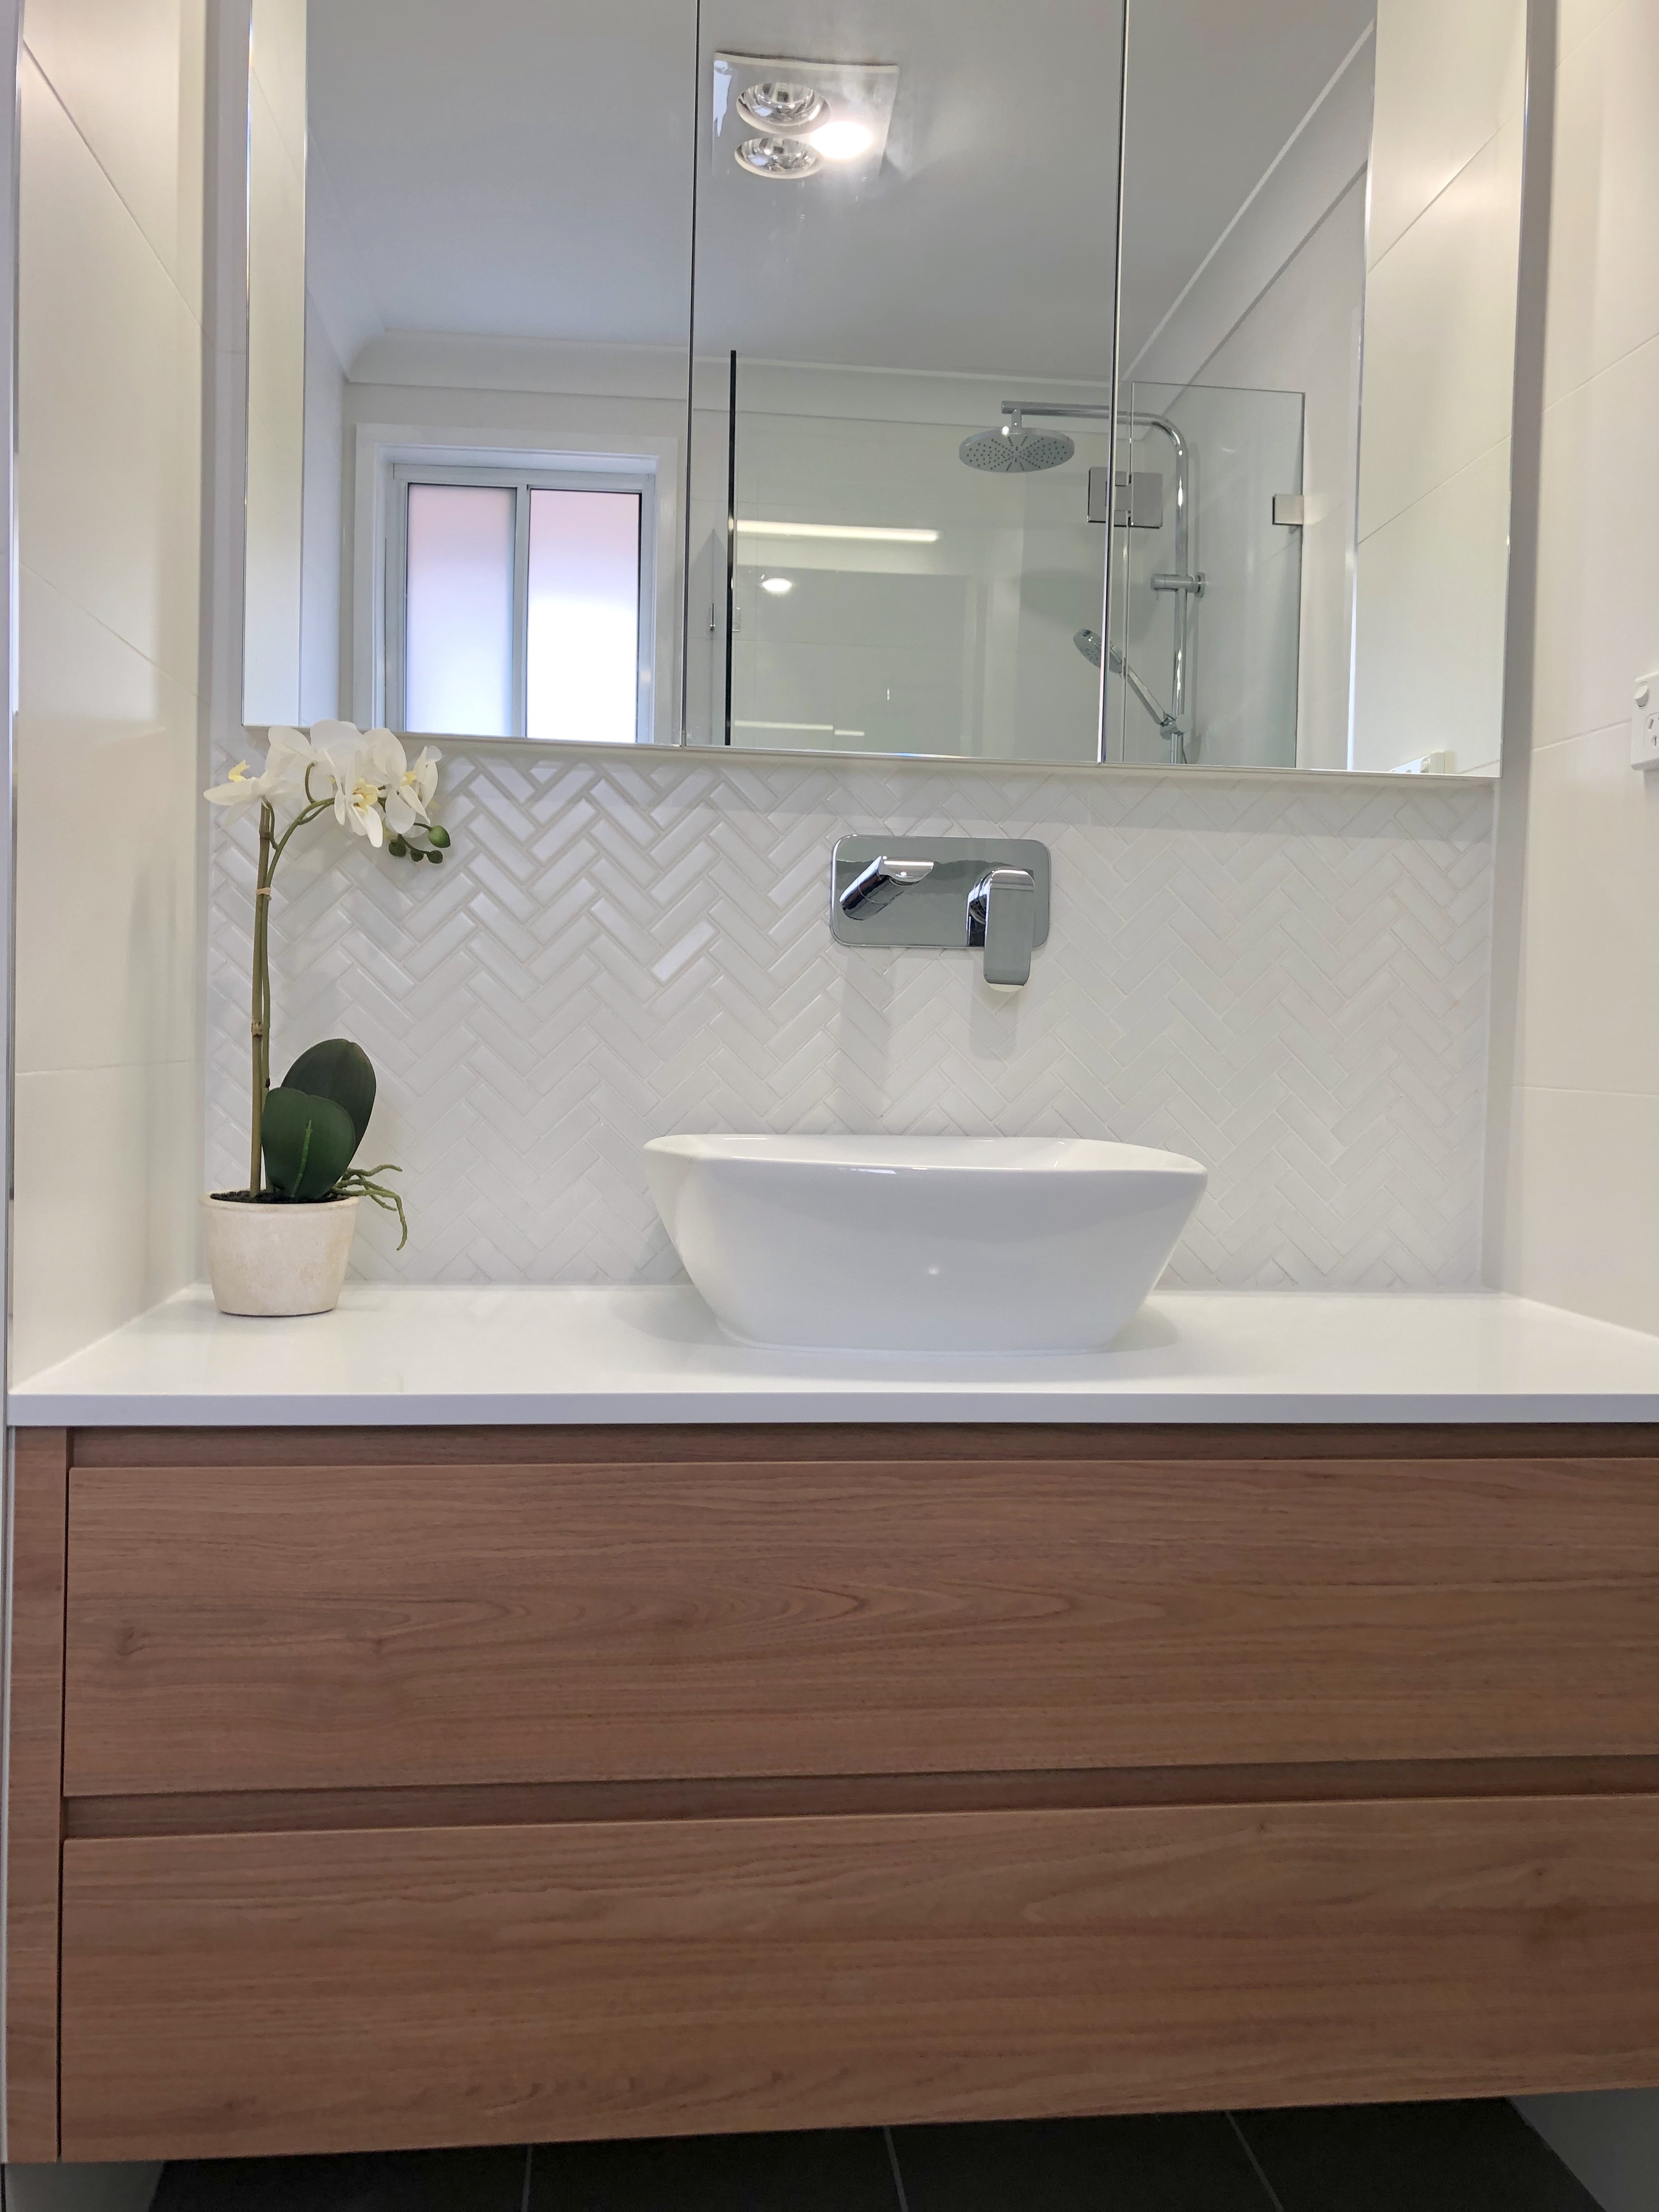 Stunning custom made timber vanity with stone benchtop, herringbone tile and custom shaving cabinet - bathroom renovation by Master Bathrooms & Kitchen.